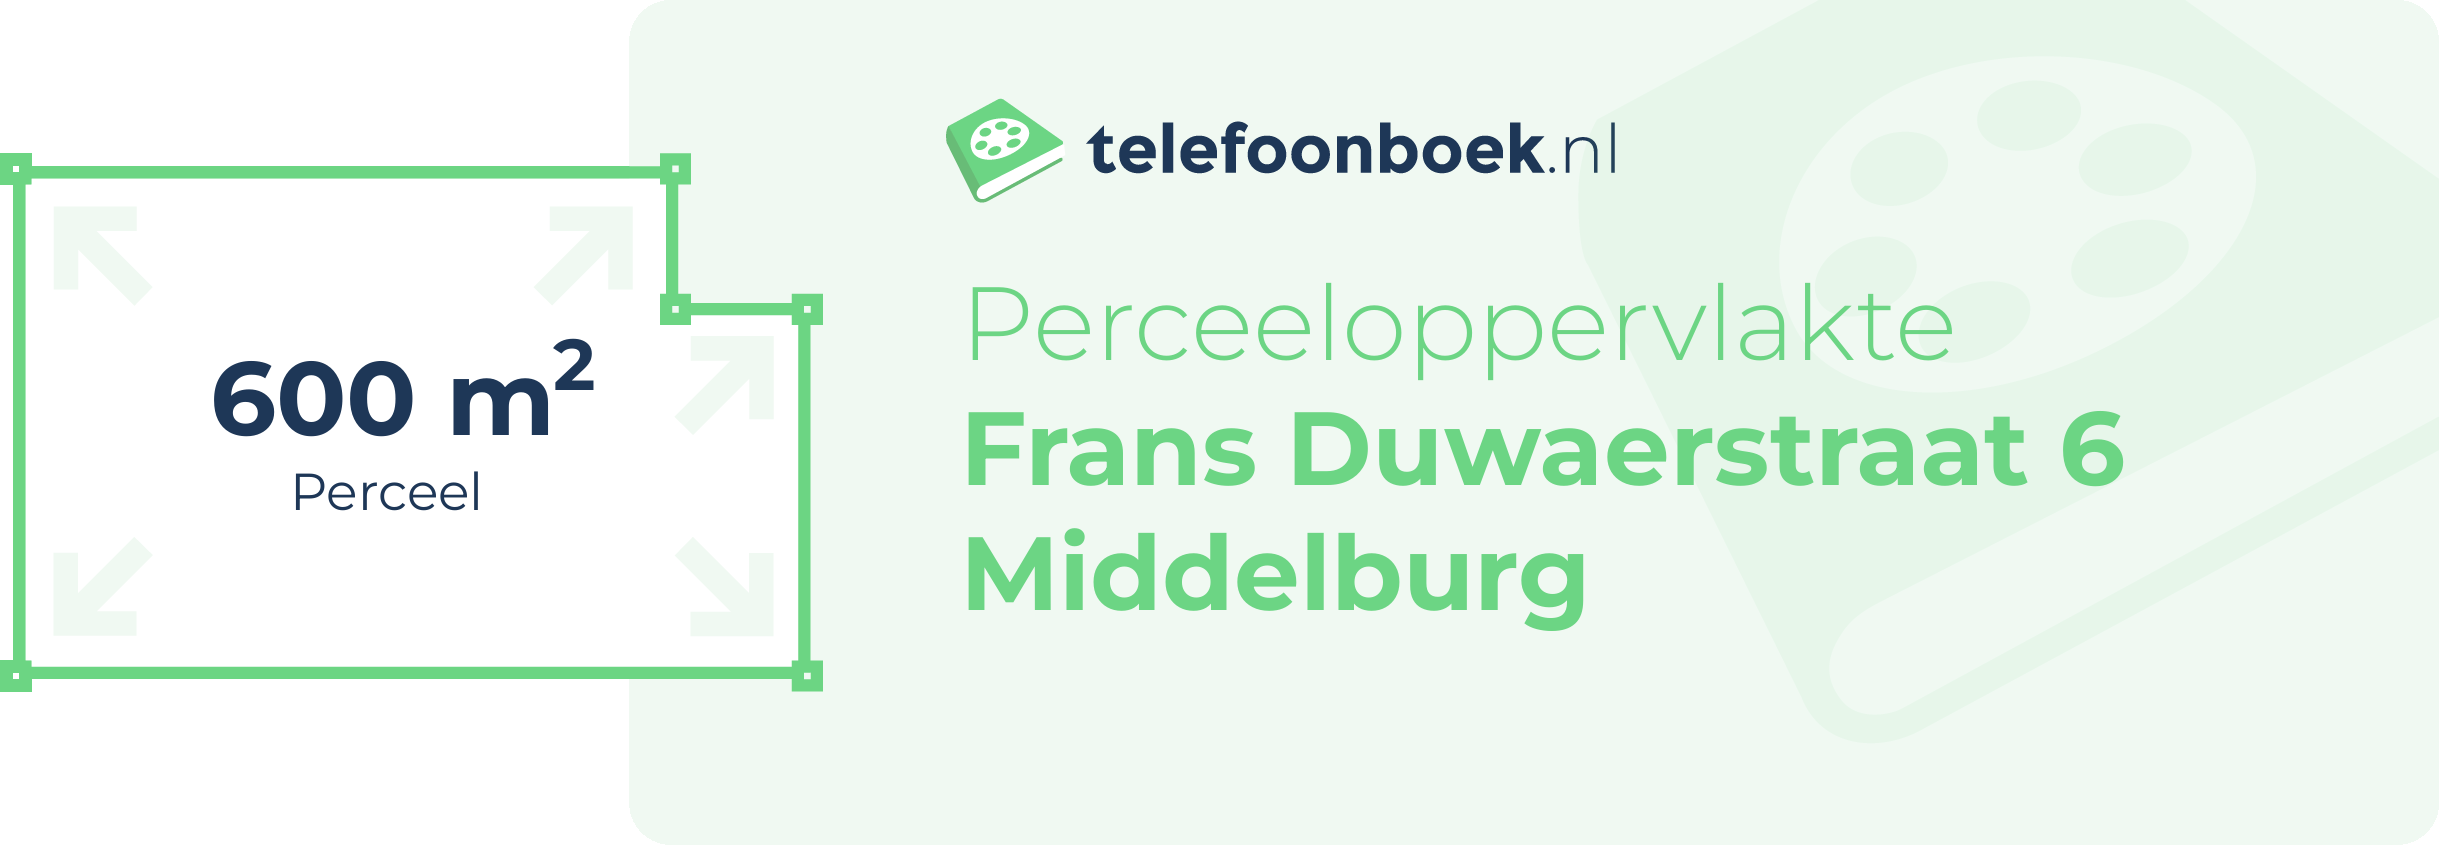 Perceeloppervlakte Frans Duwaerstraat 6 Middelburg